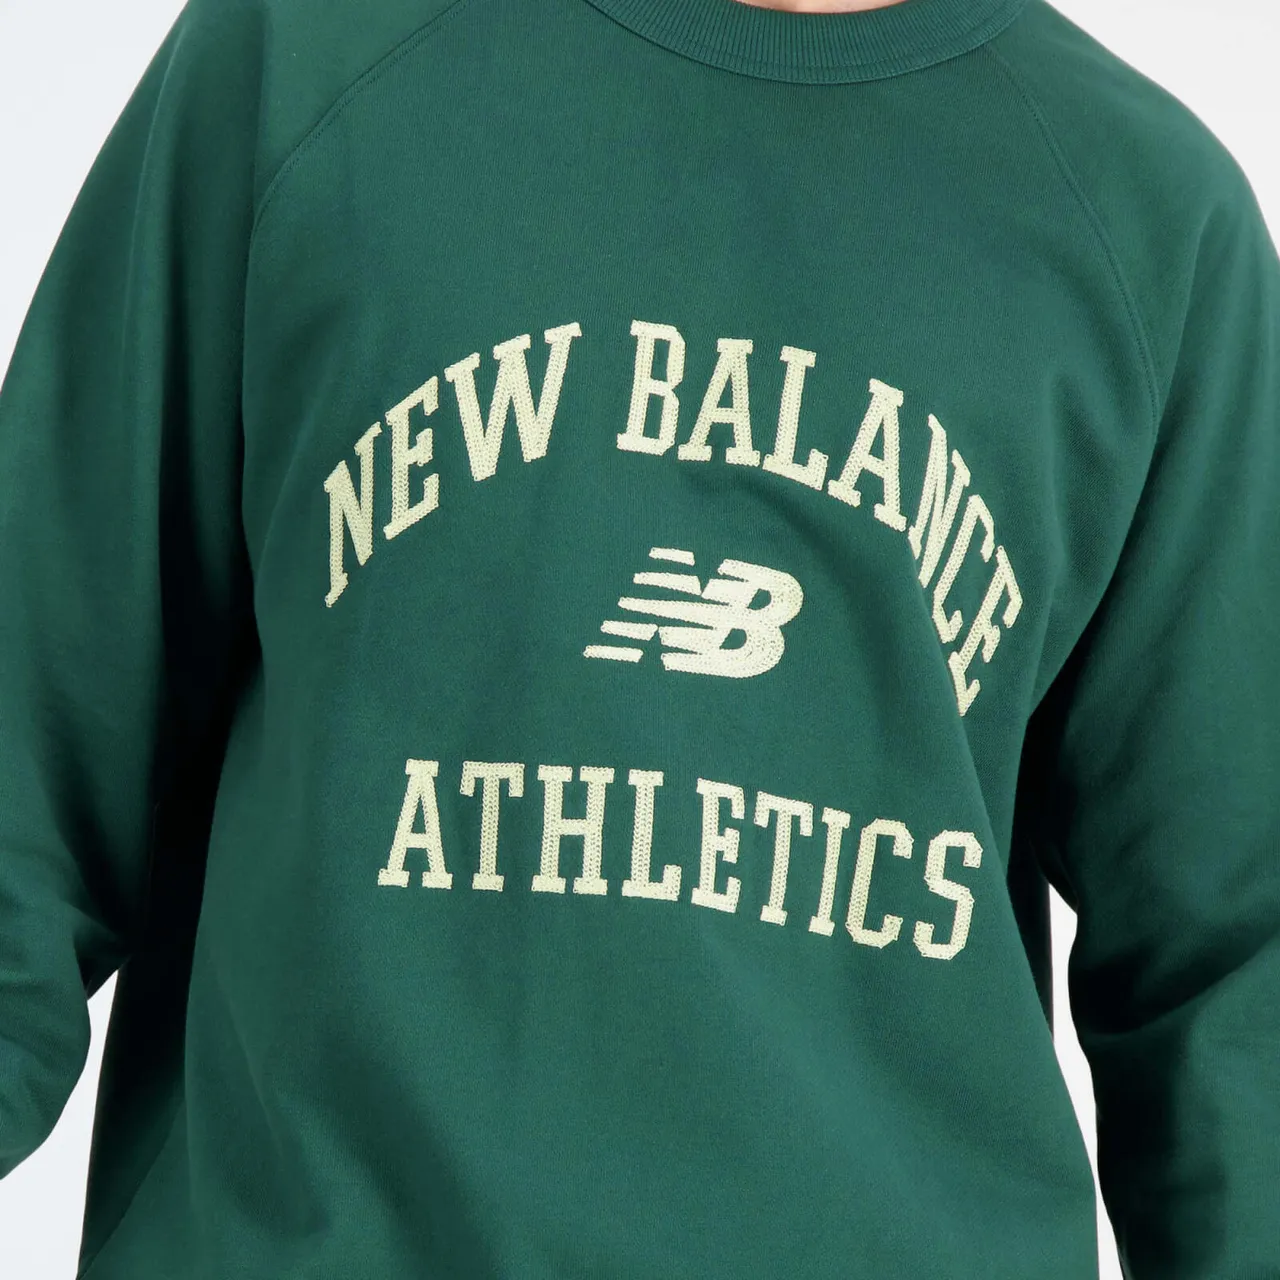 New Balance Athletics Varsity Cotton-Fleece Sweatshirt